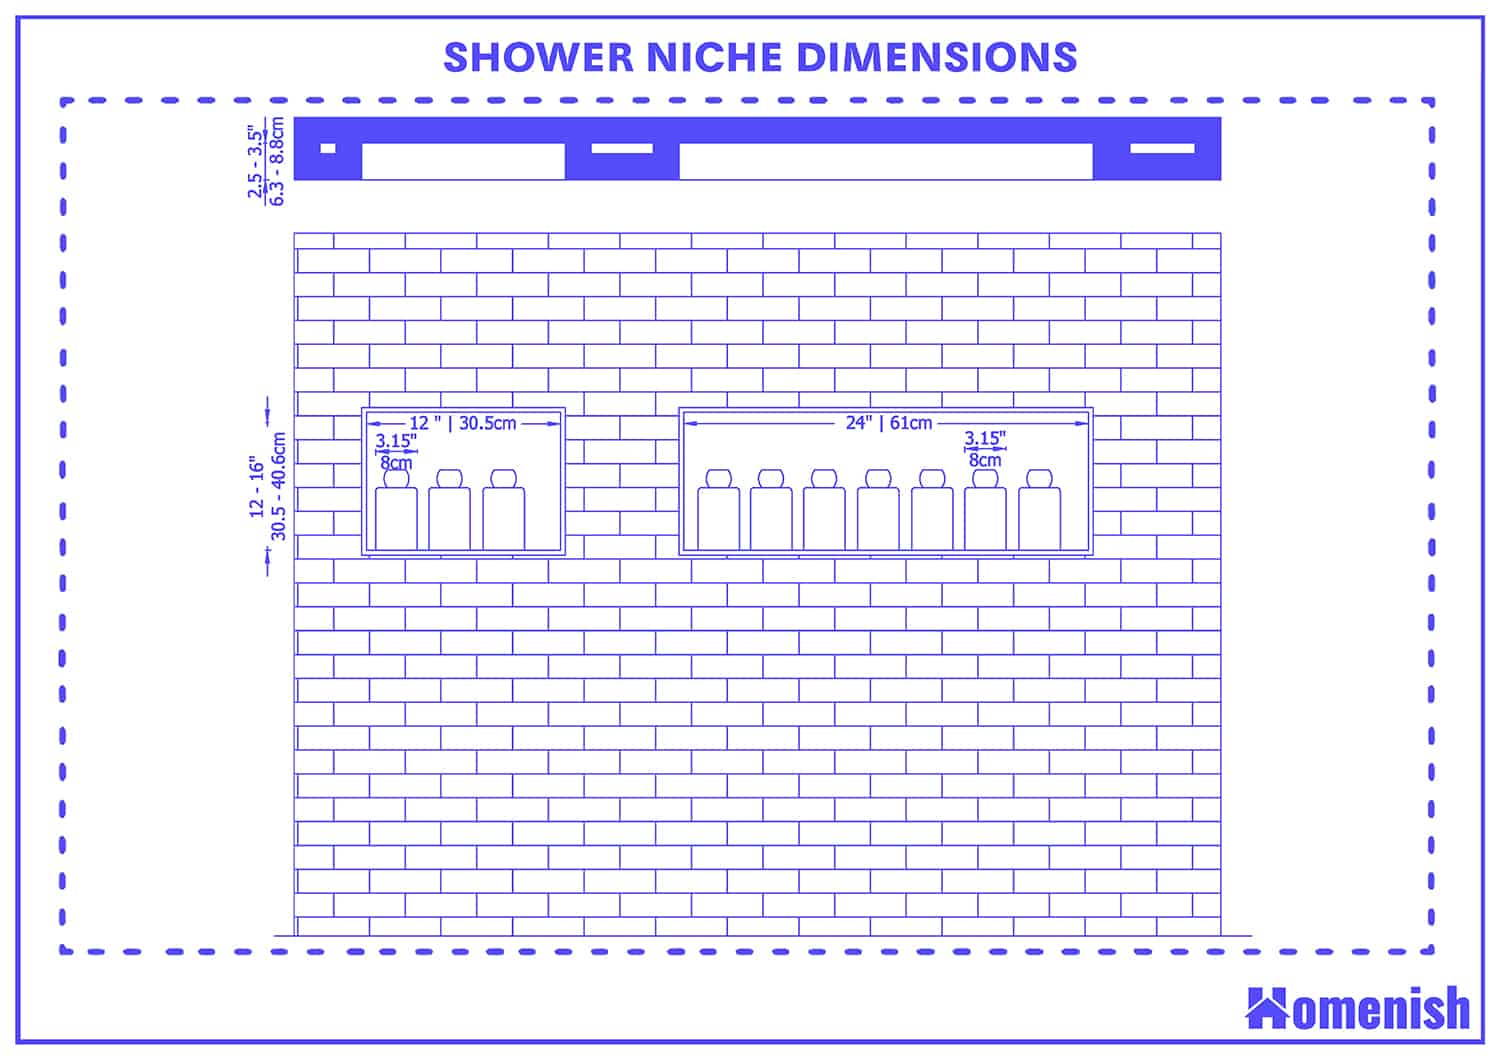 Shower Niche Dimensions